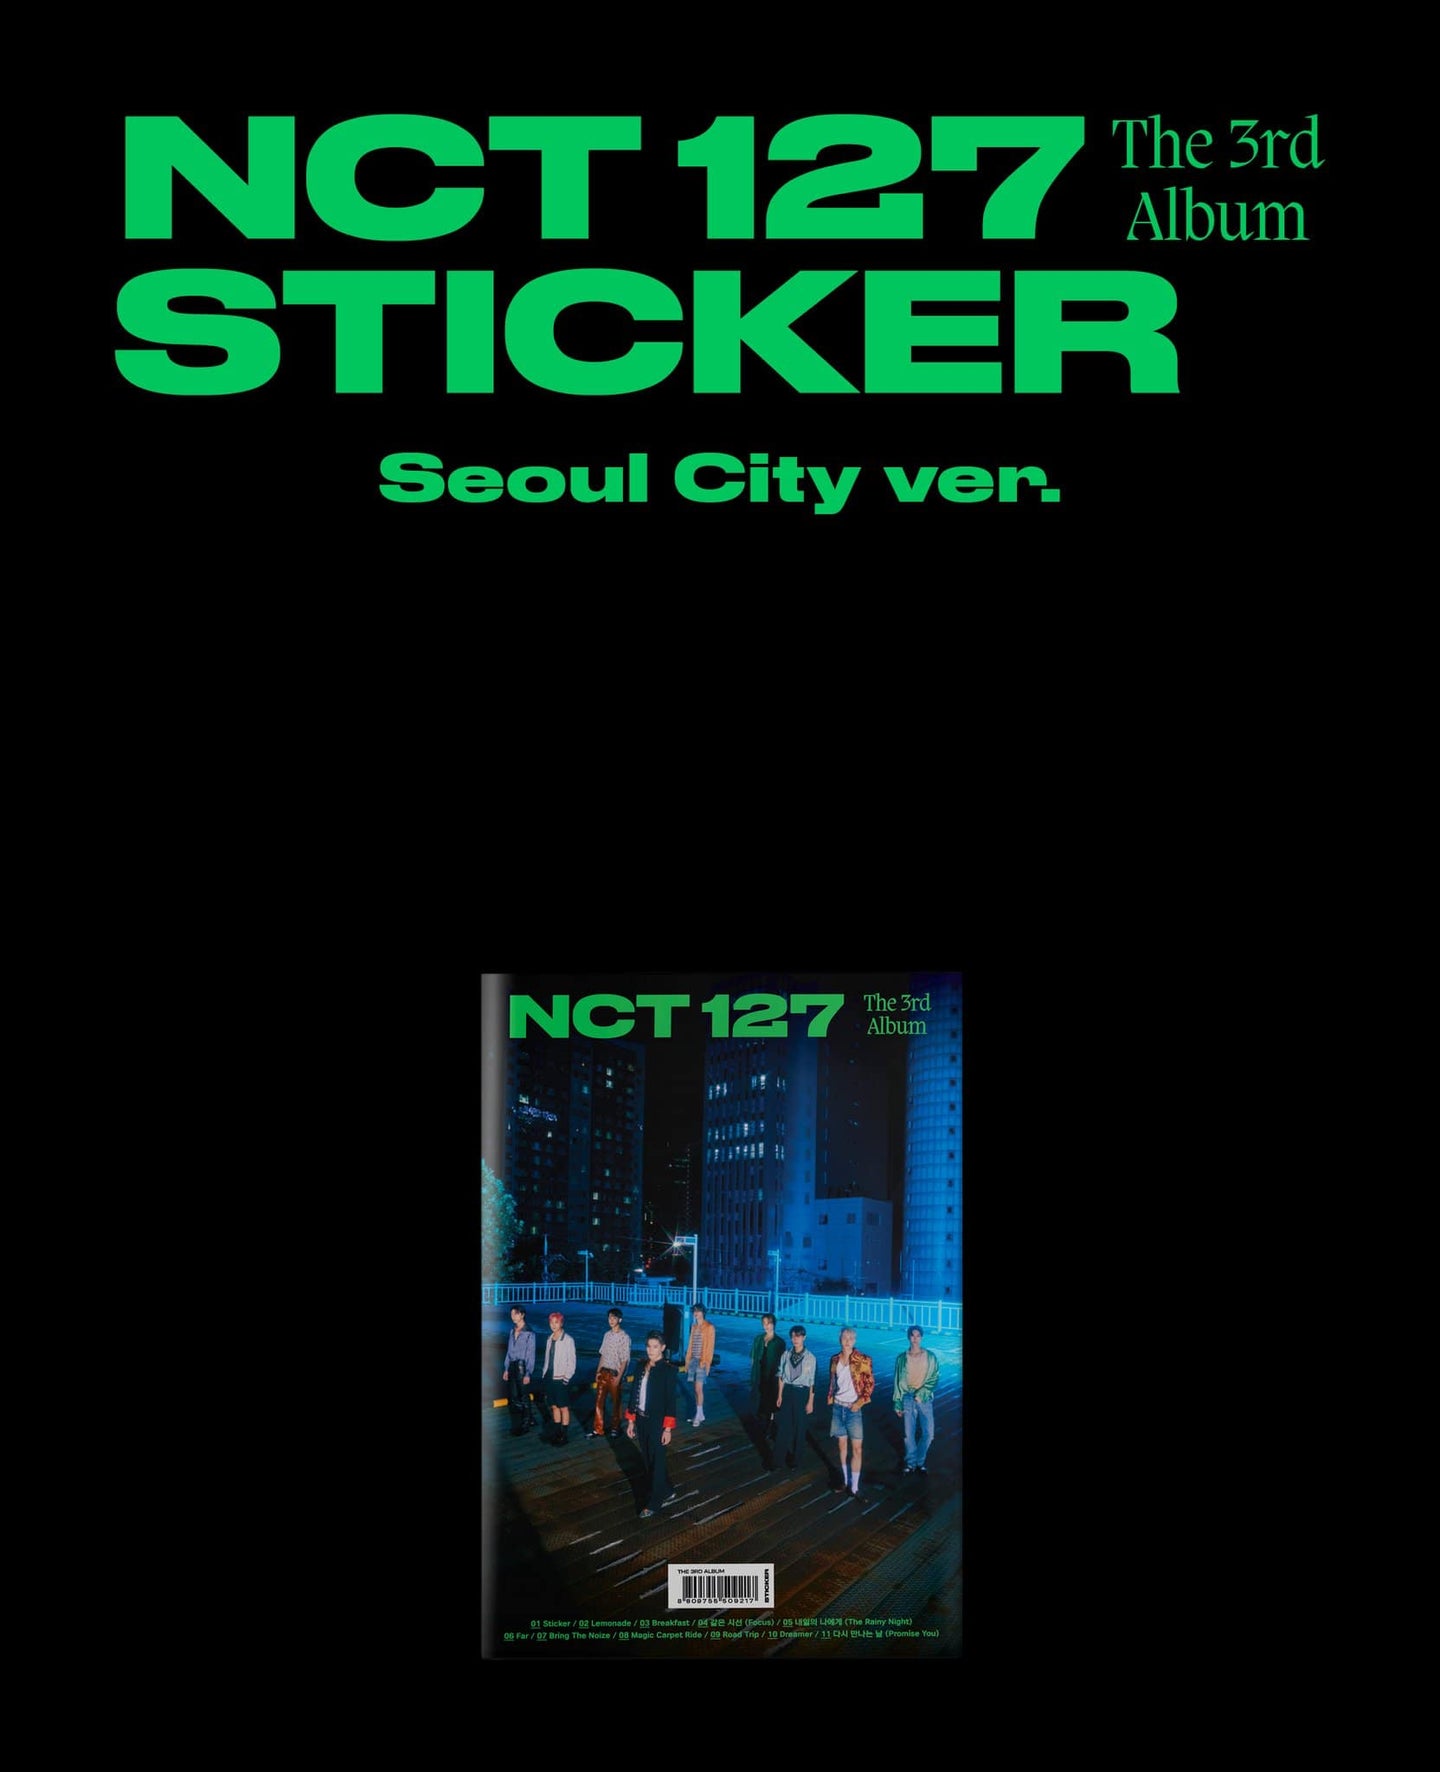 NCT 127 Album Vol. 3 - Sticker (Seoul City Ver.)